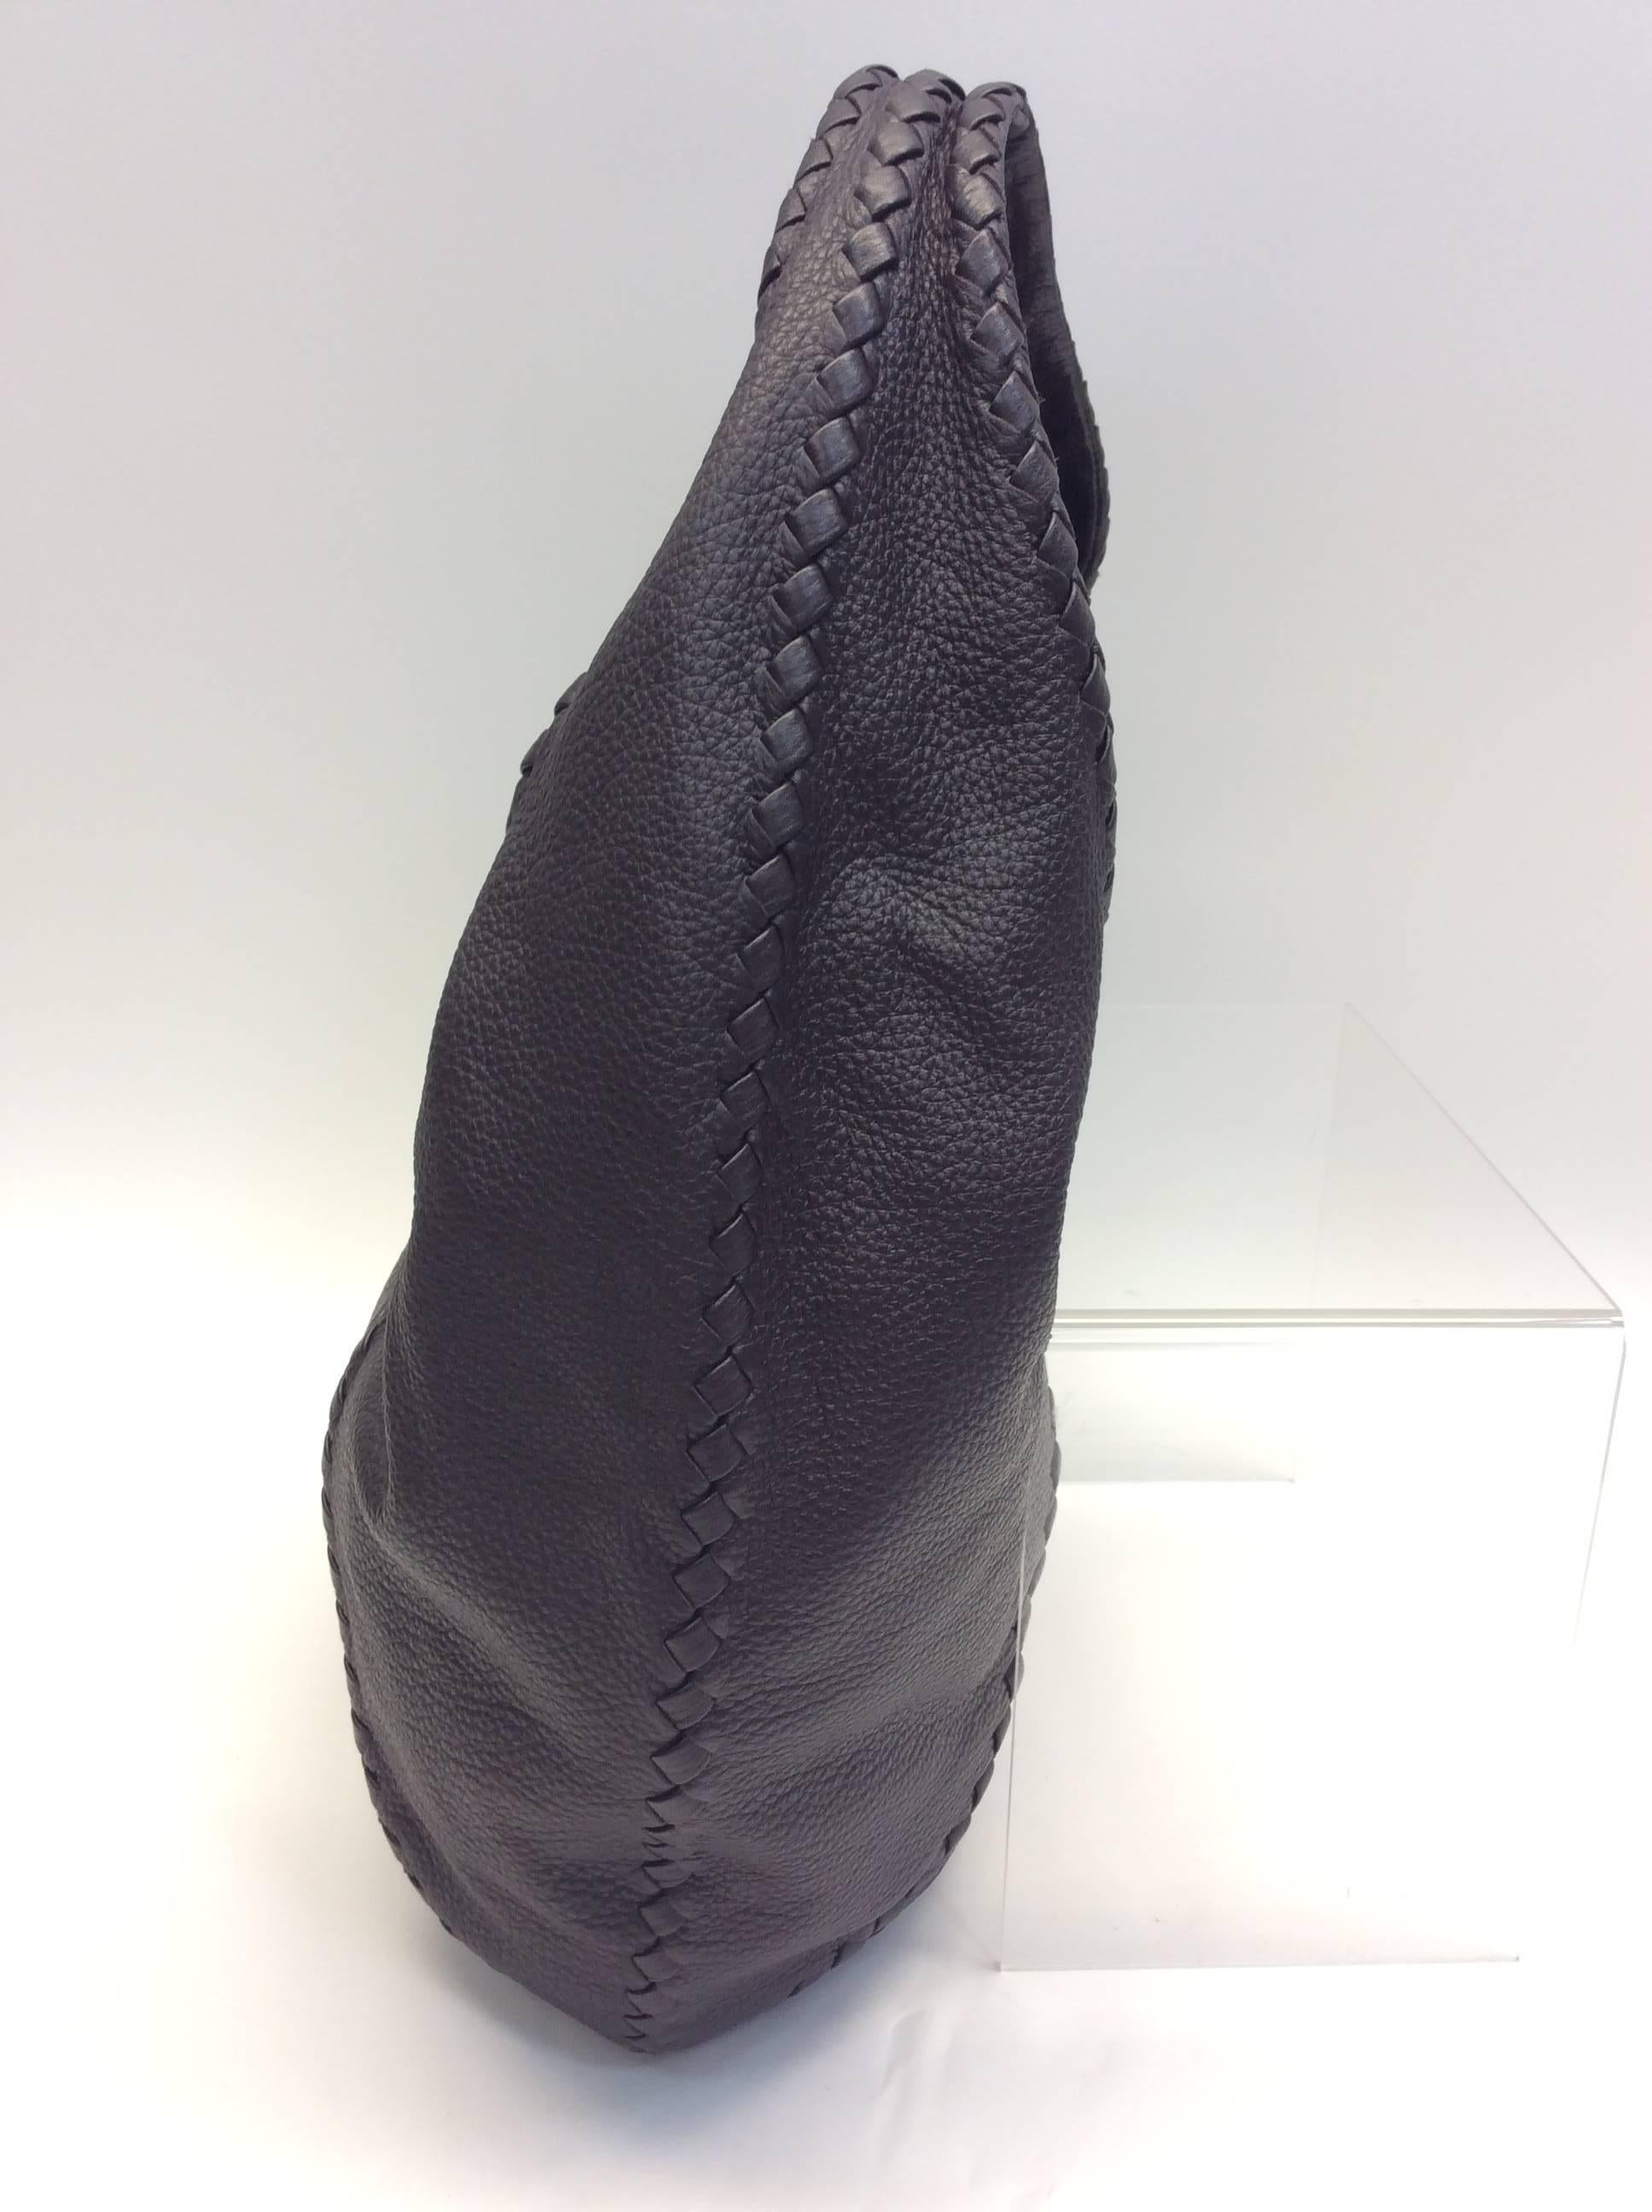 Bottega Veneta Brown Leather Hobo Cervo Shoulderbag
$1099
Made in Italy
Leather
17